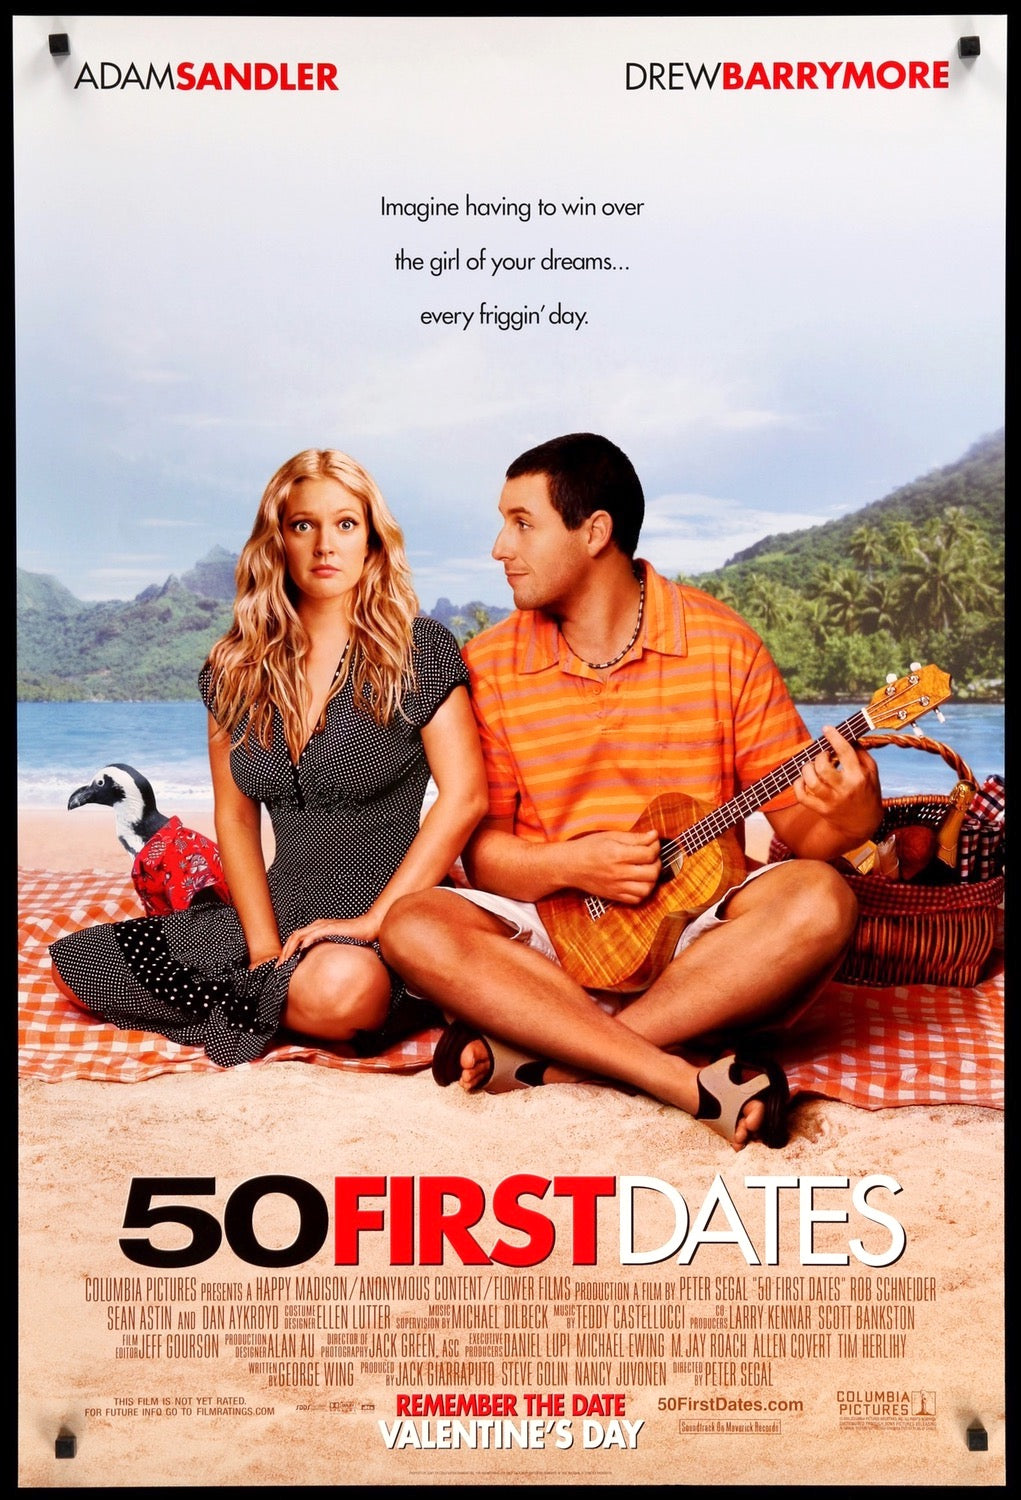 50 First Dates (2004) original movie poster for sale at Original Film Art